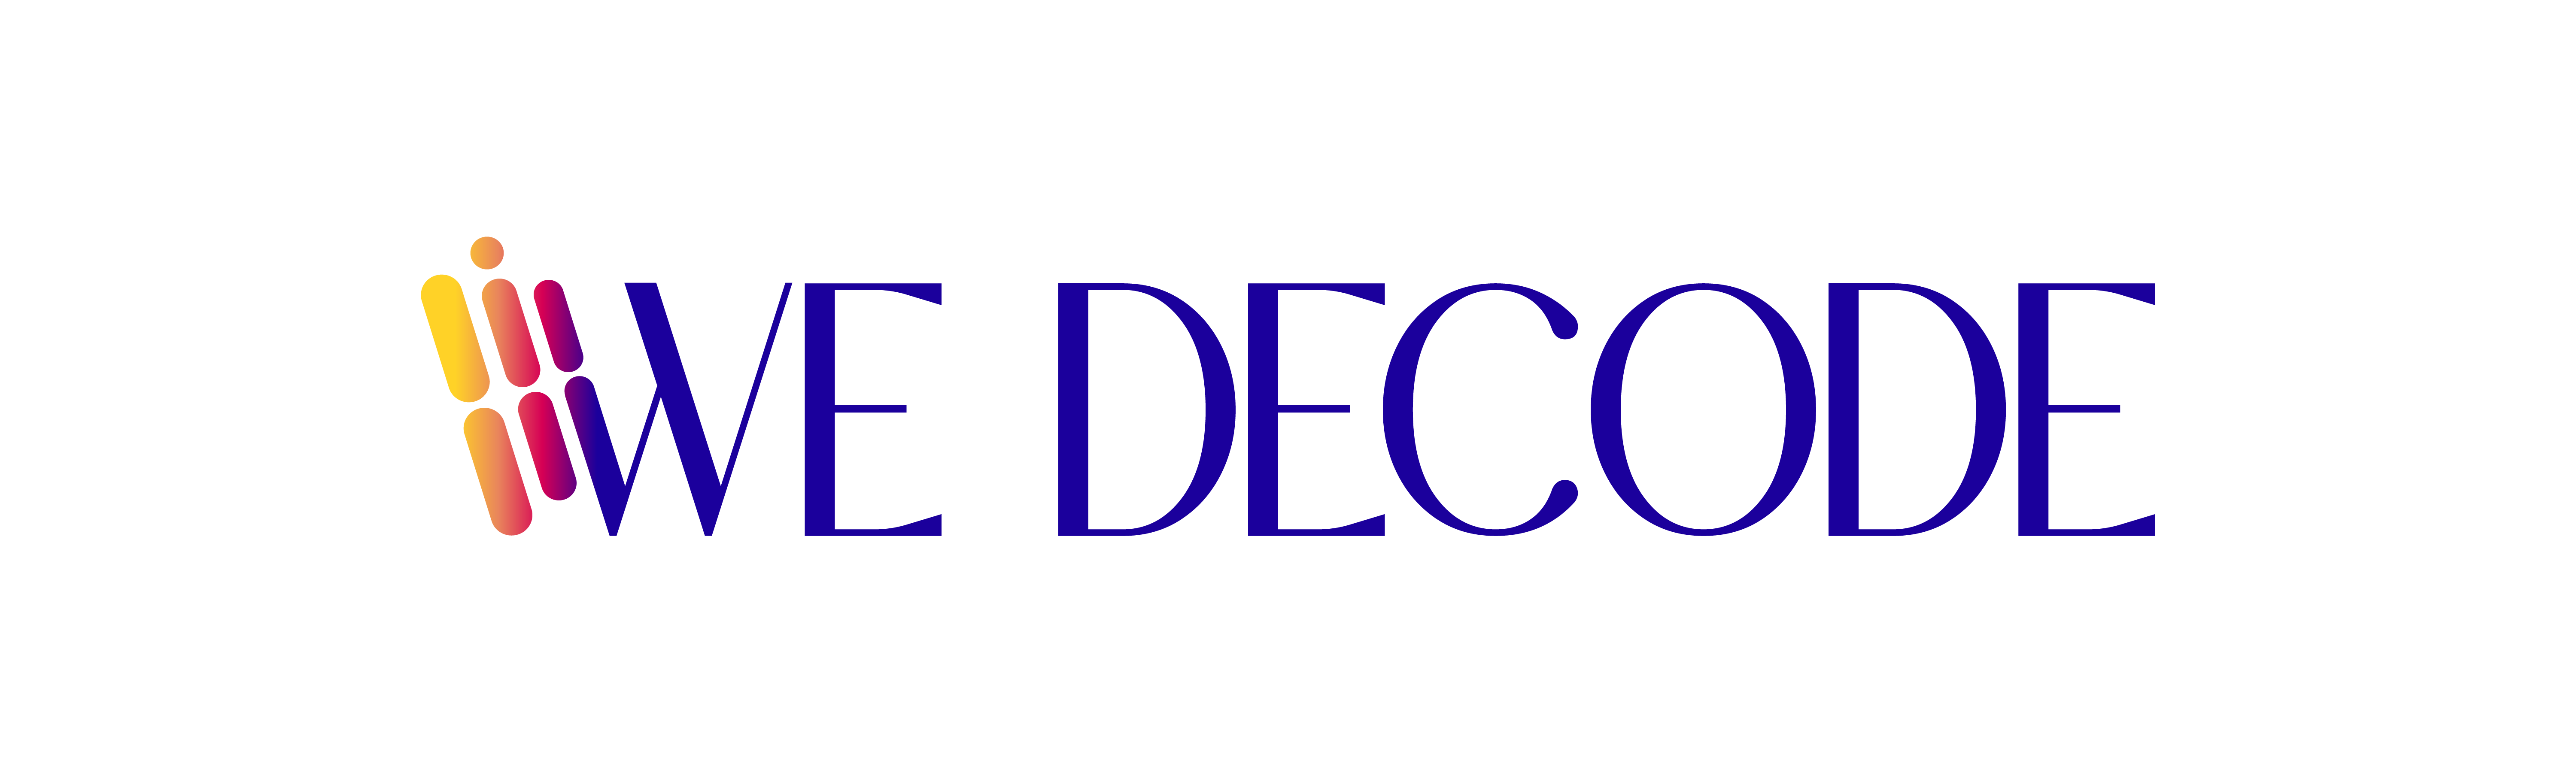 https://storage.googleapis.com/accesswire/media/701997/We-Decode-logo.png